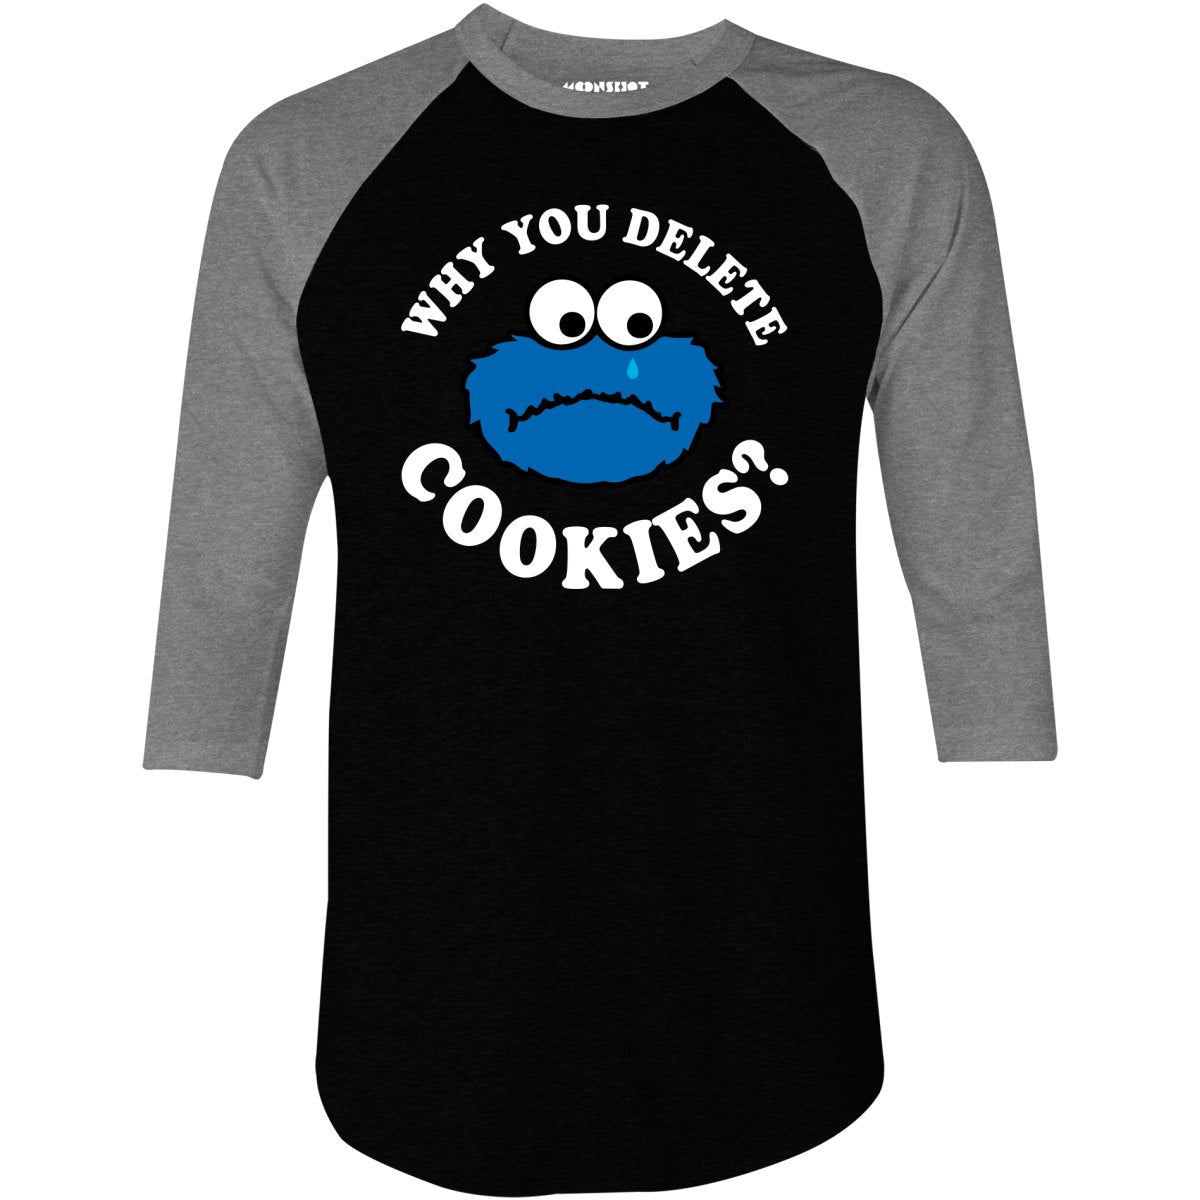 Why You Delete Cookies? - 3/4 Sleeve Raglan T-Shirt